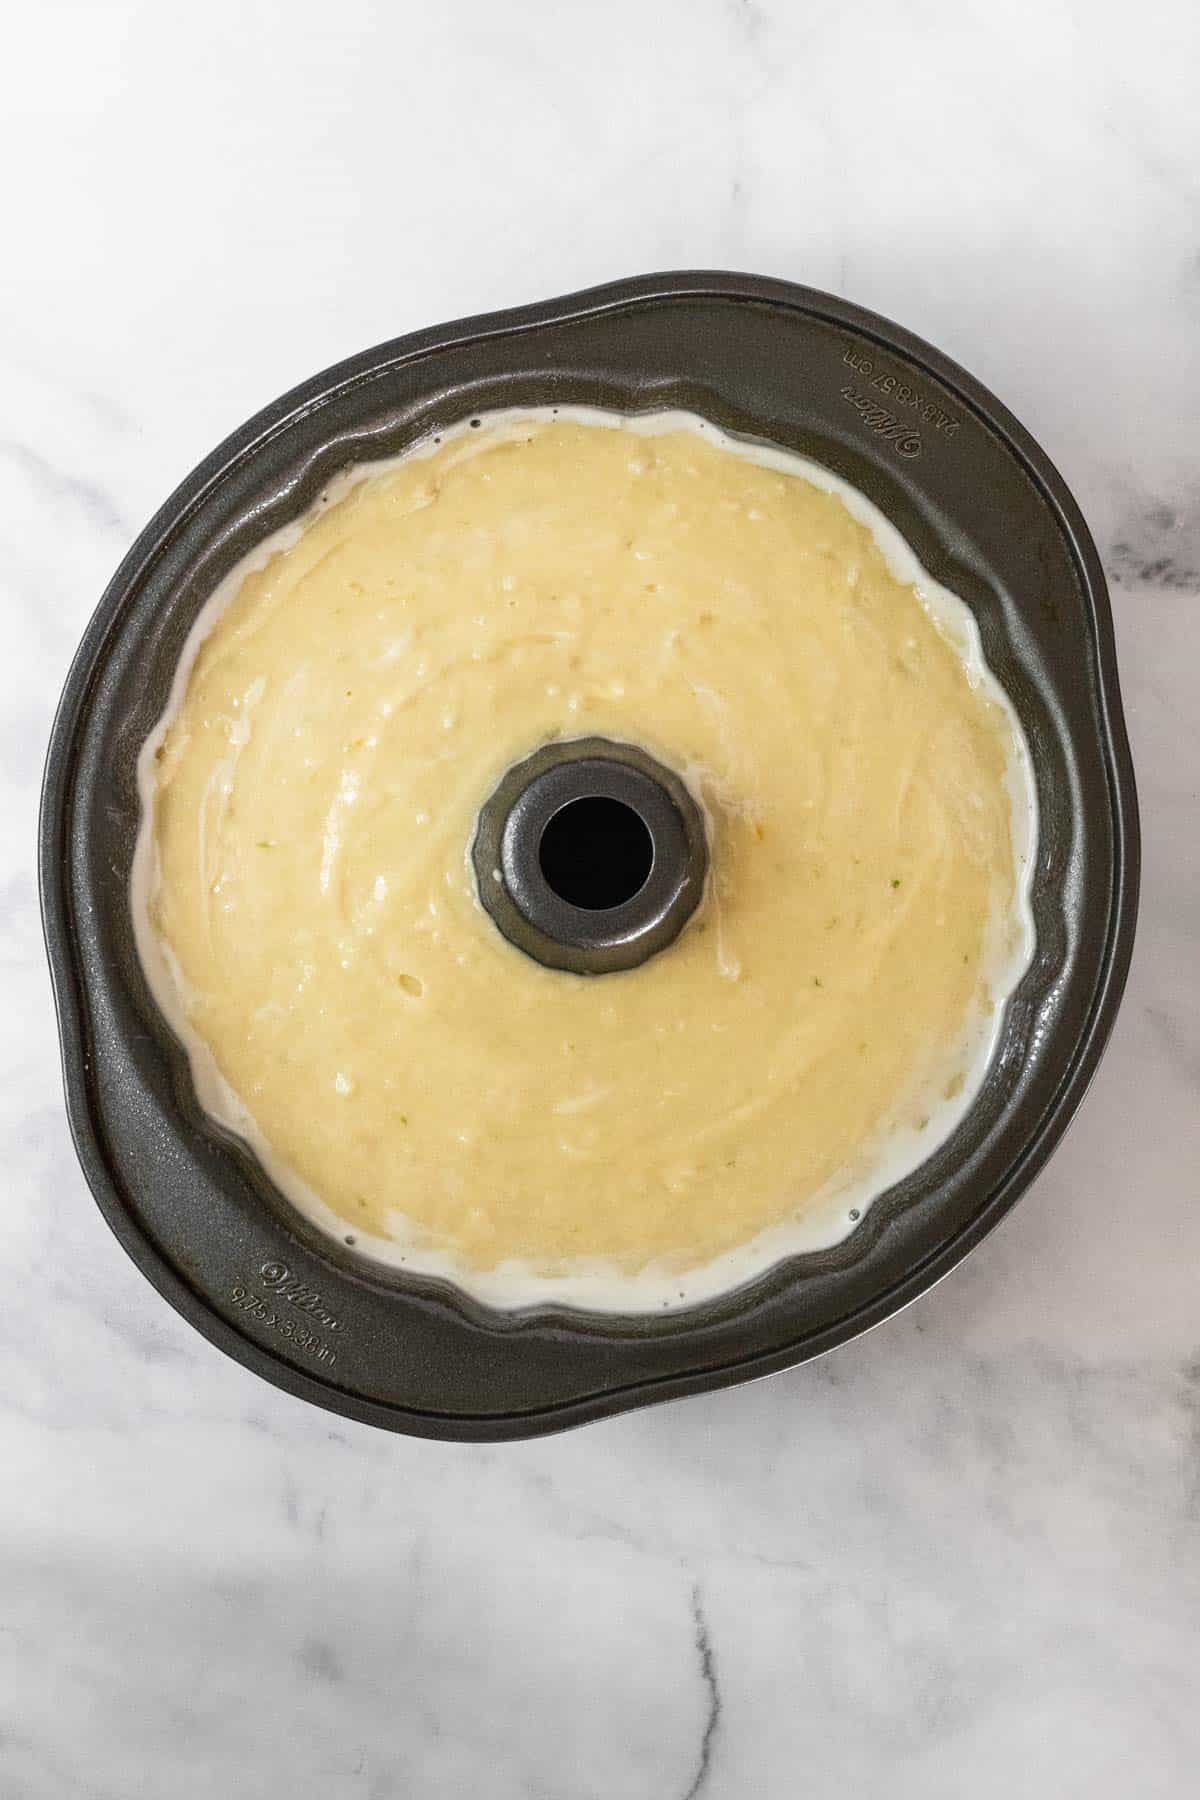 Cake batter in a greased bundt pan.